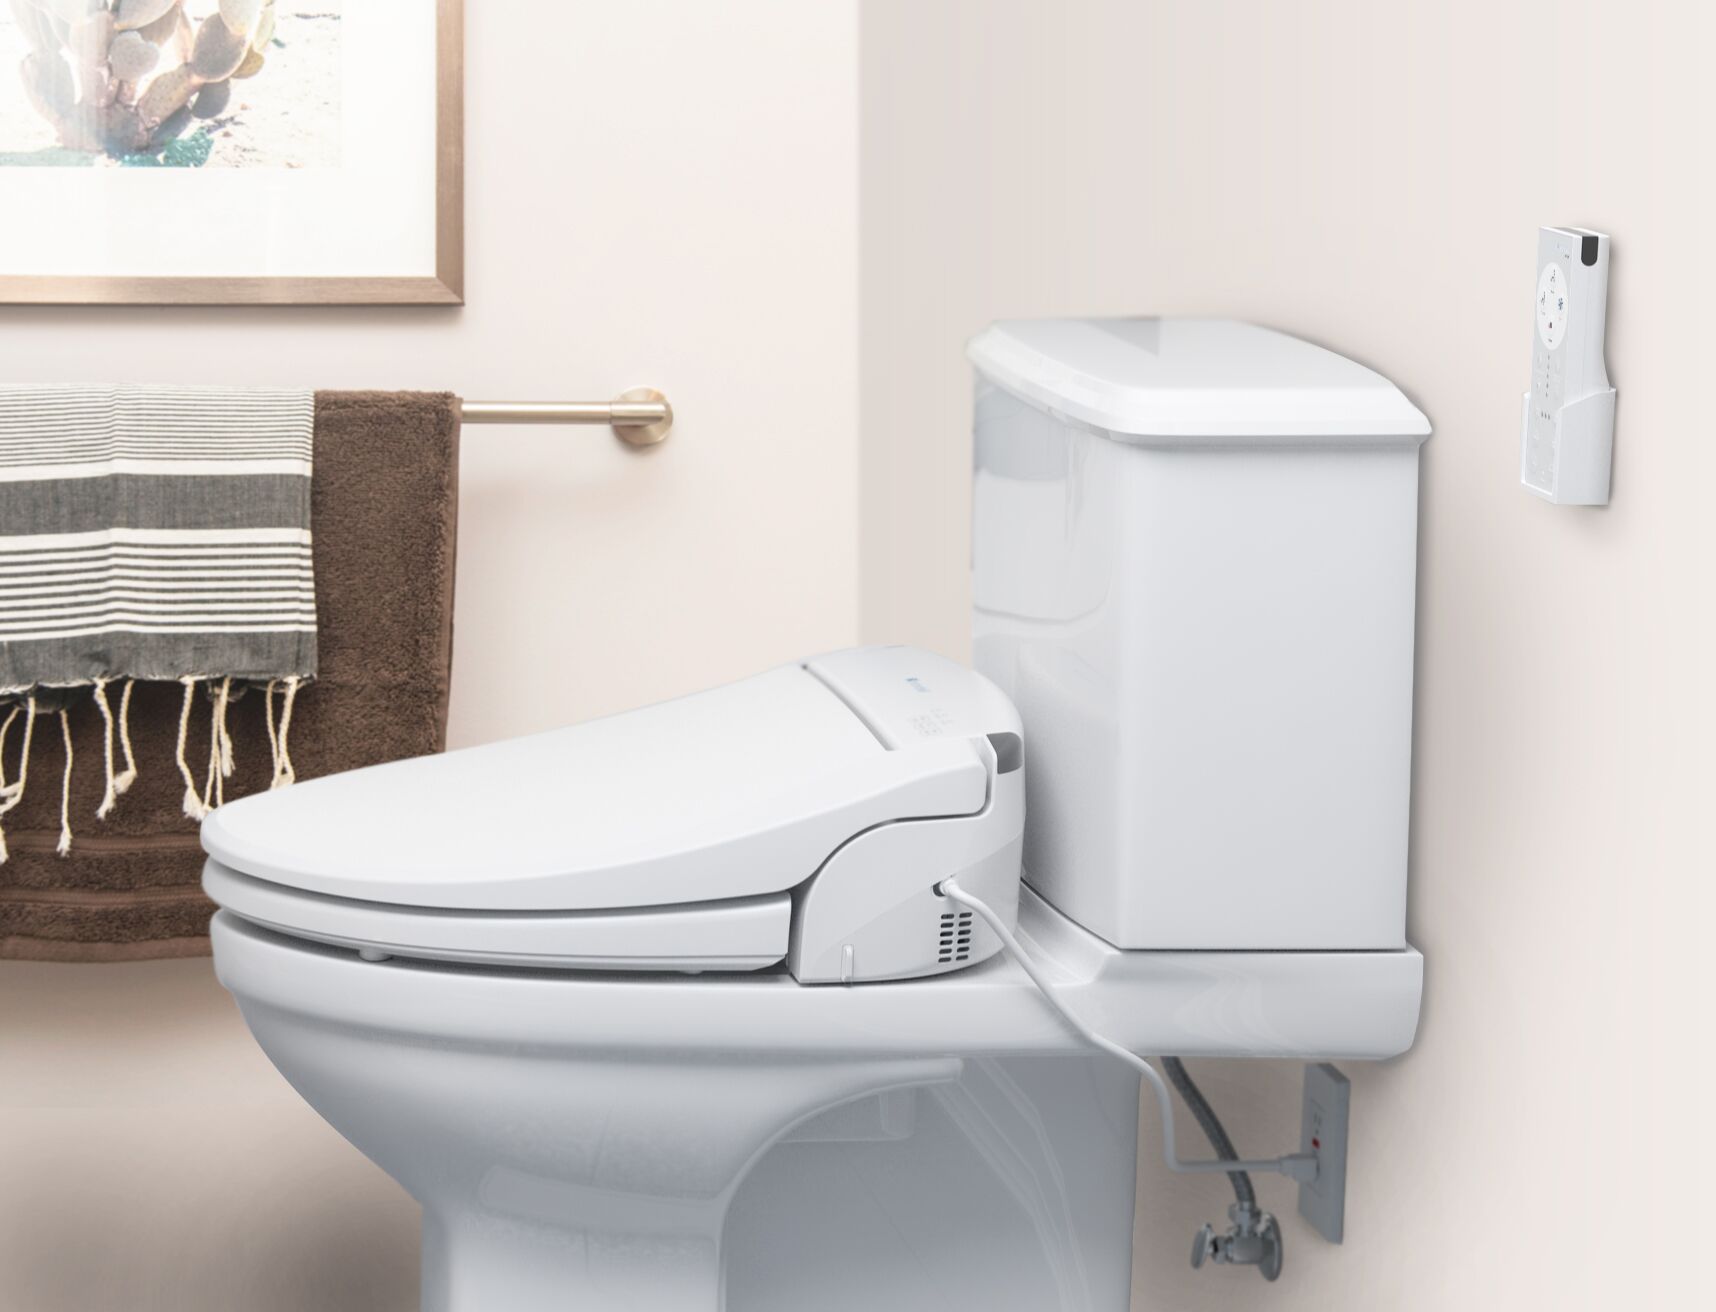 Sherlock Holmes Onrecht Score Swash DS725 Advanced Bidet Heated Toilet Seat